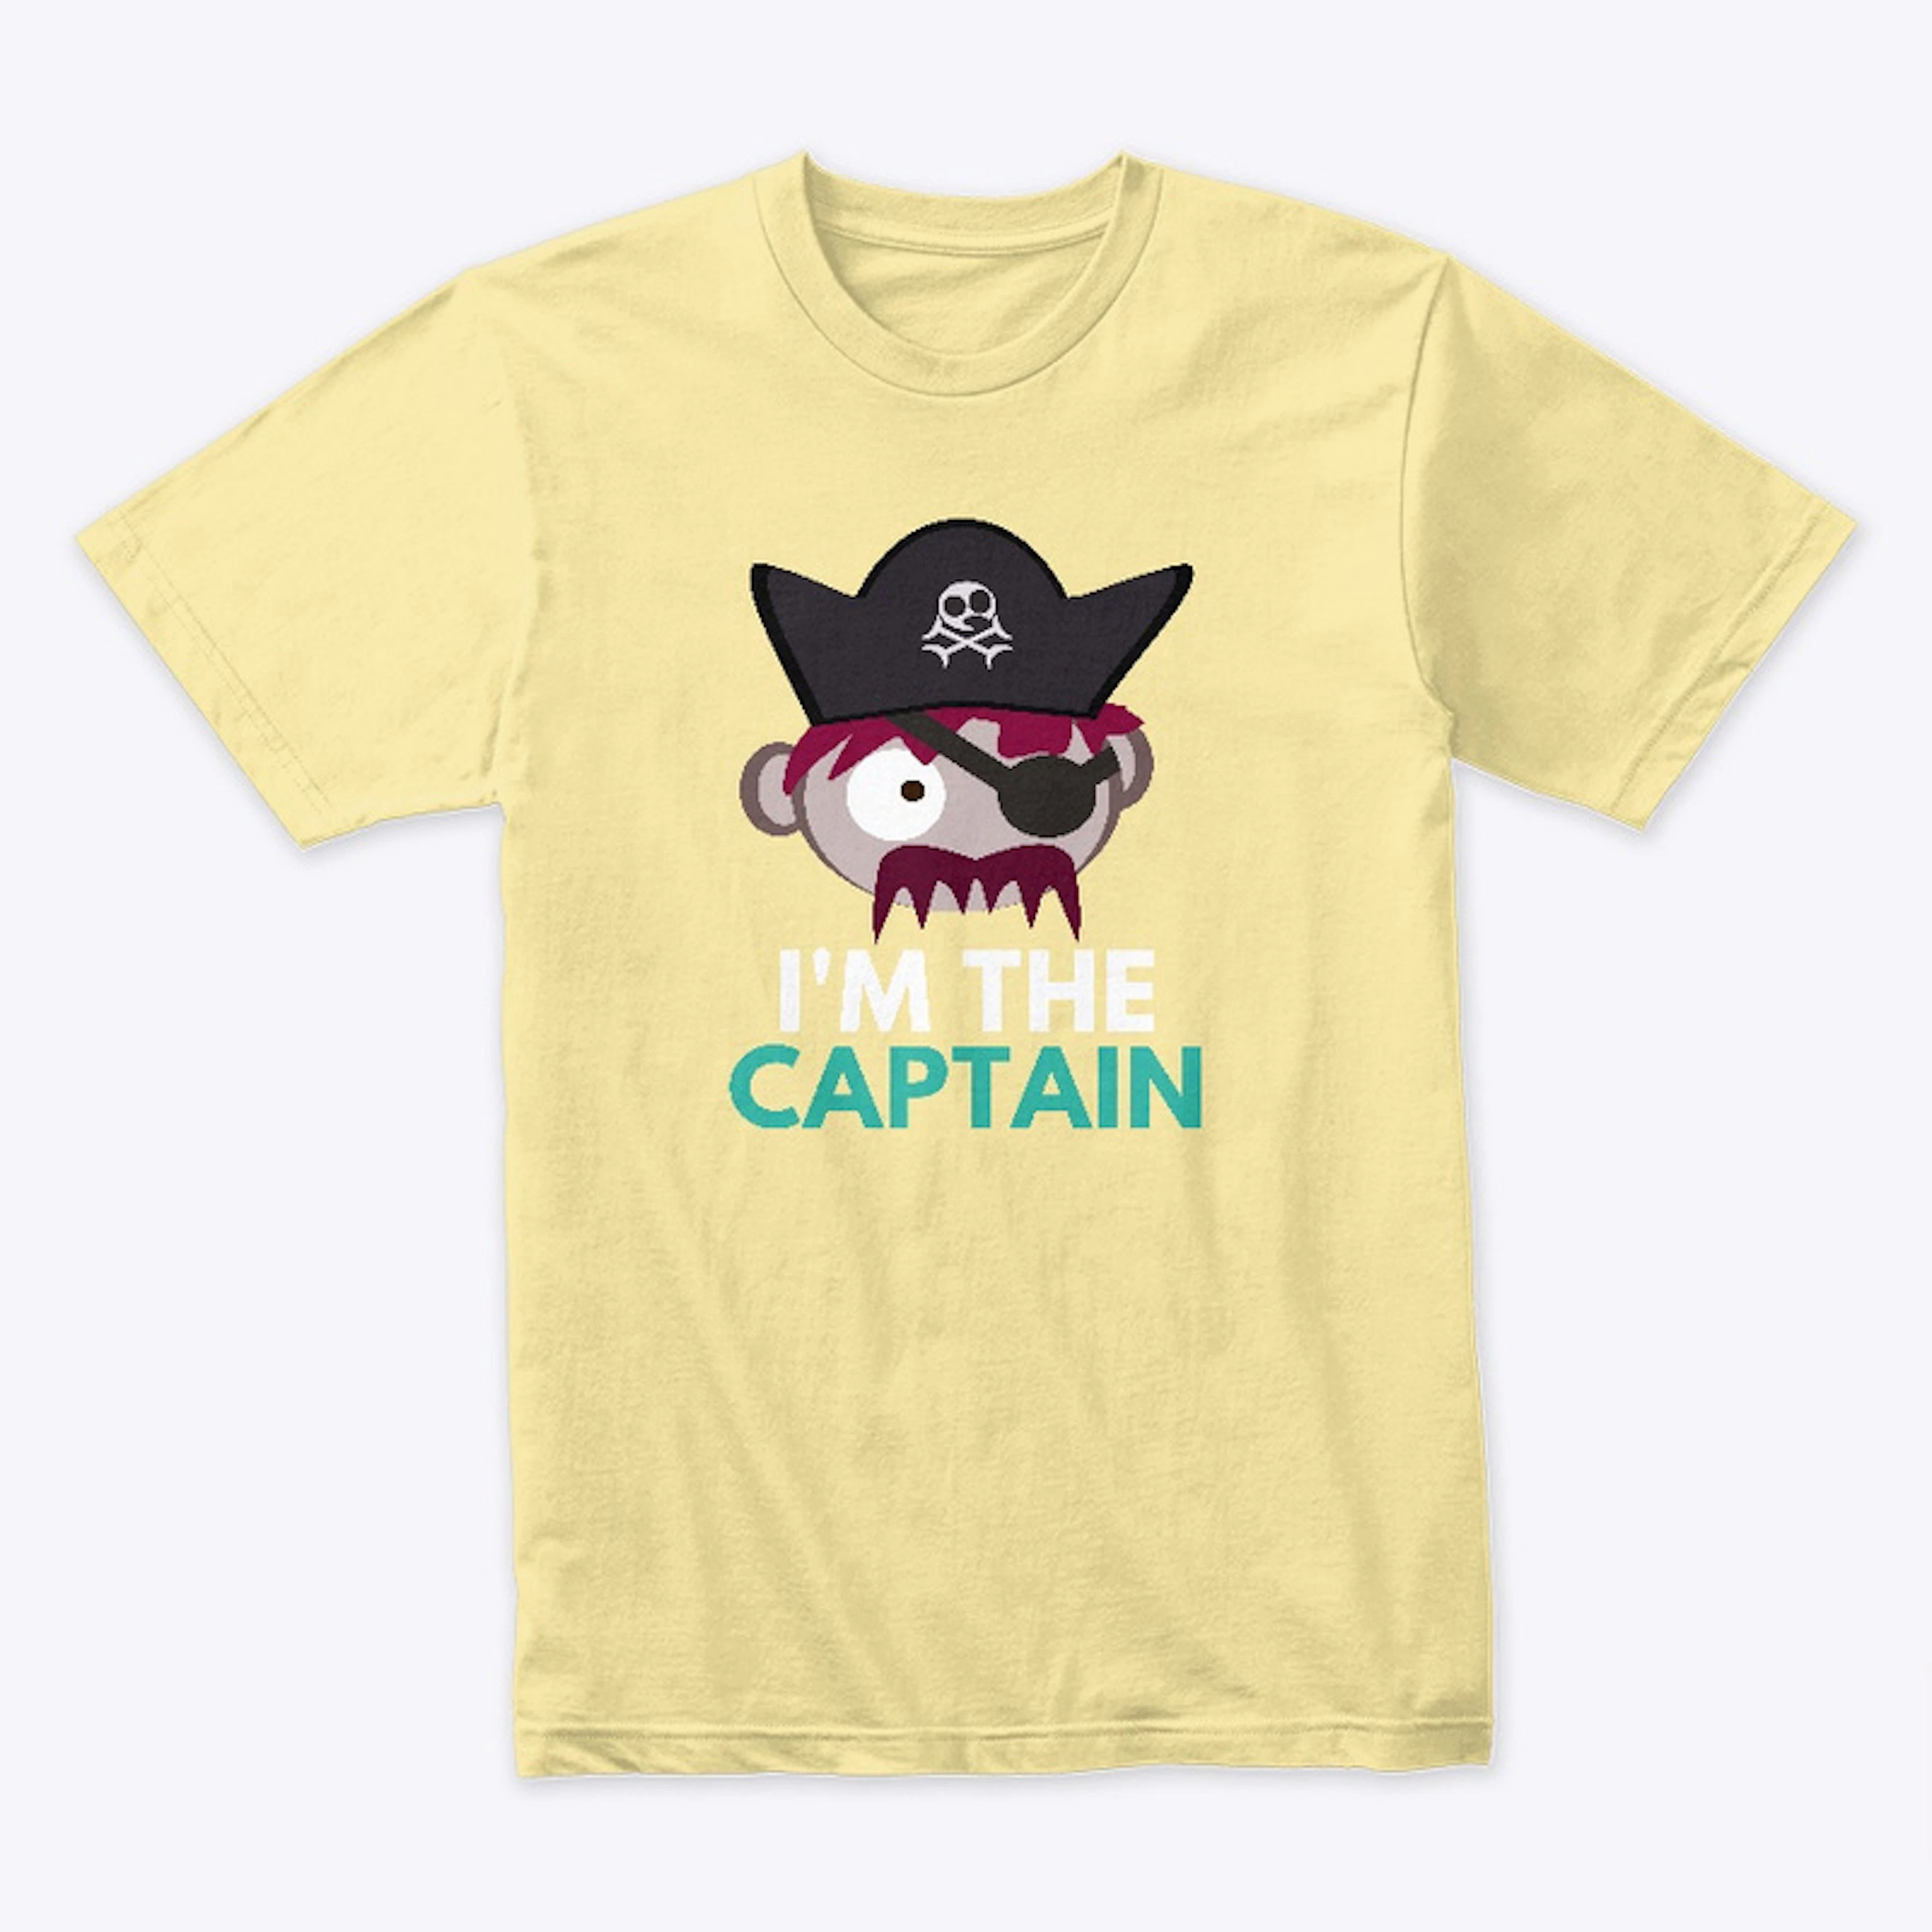 I'm the captain!